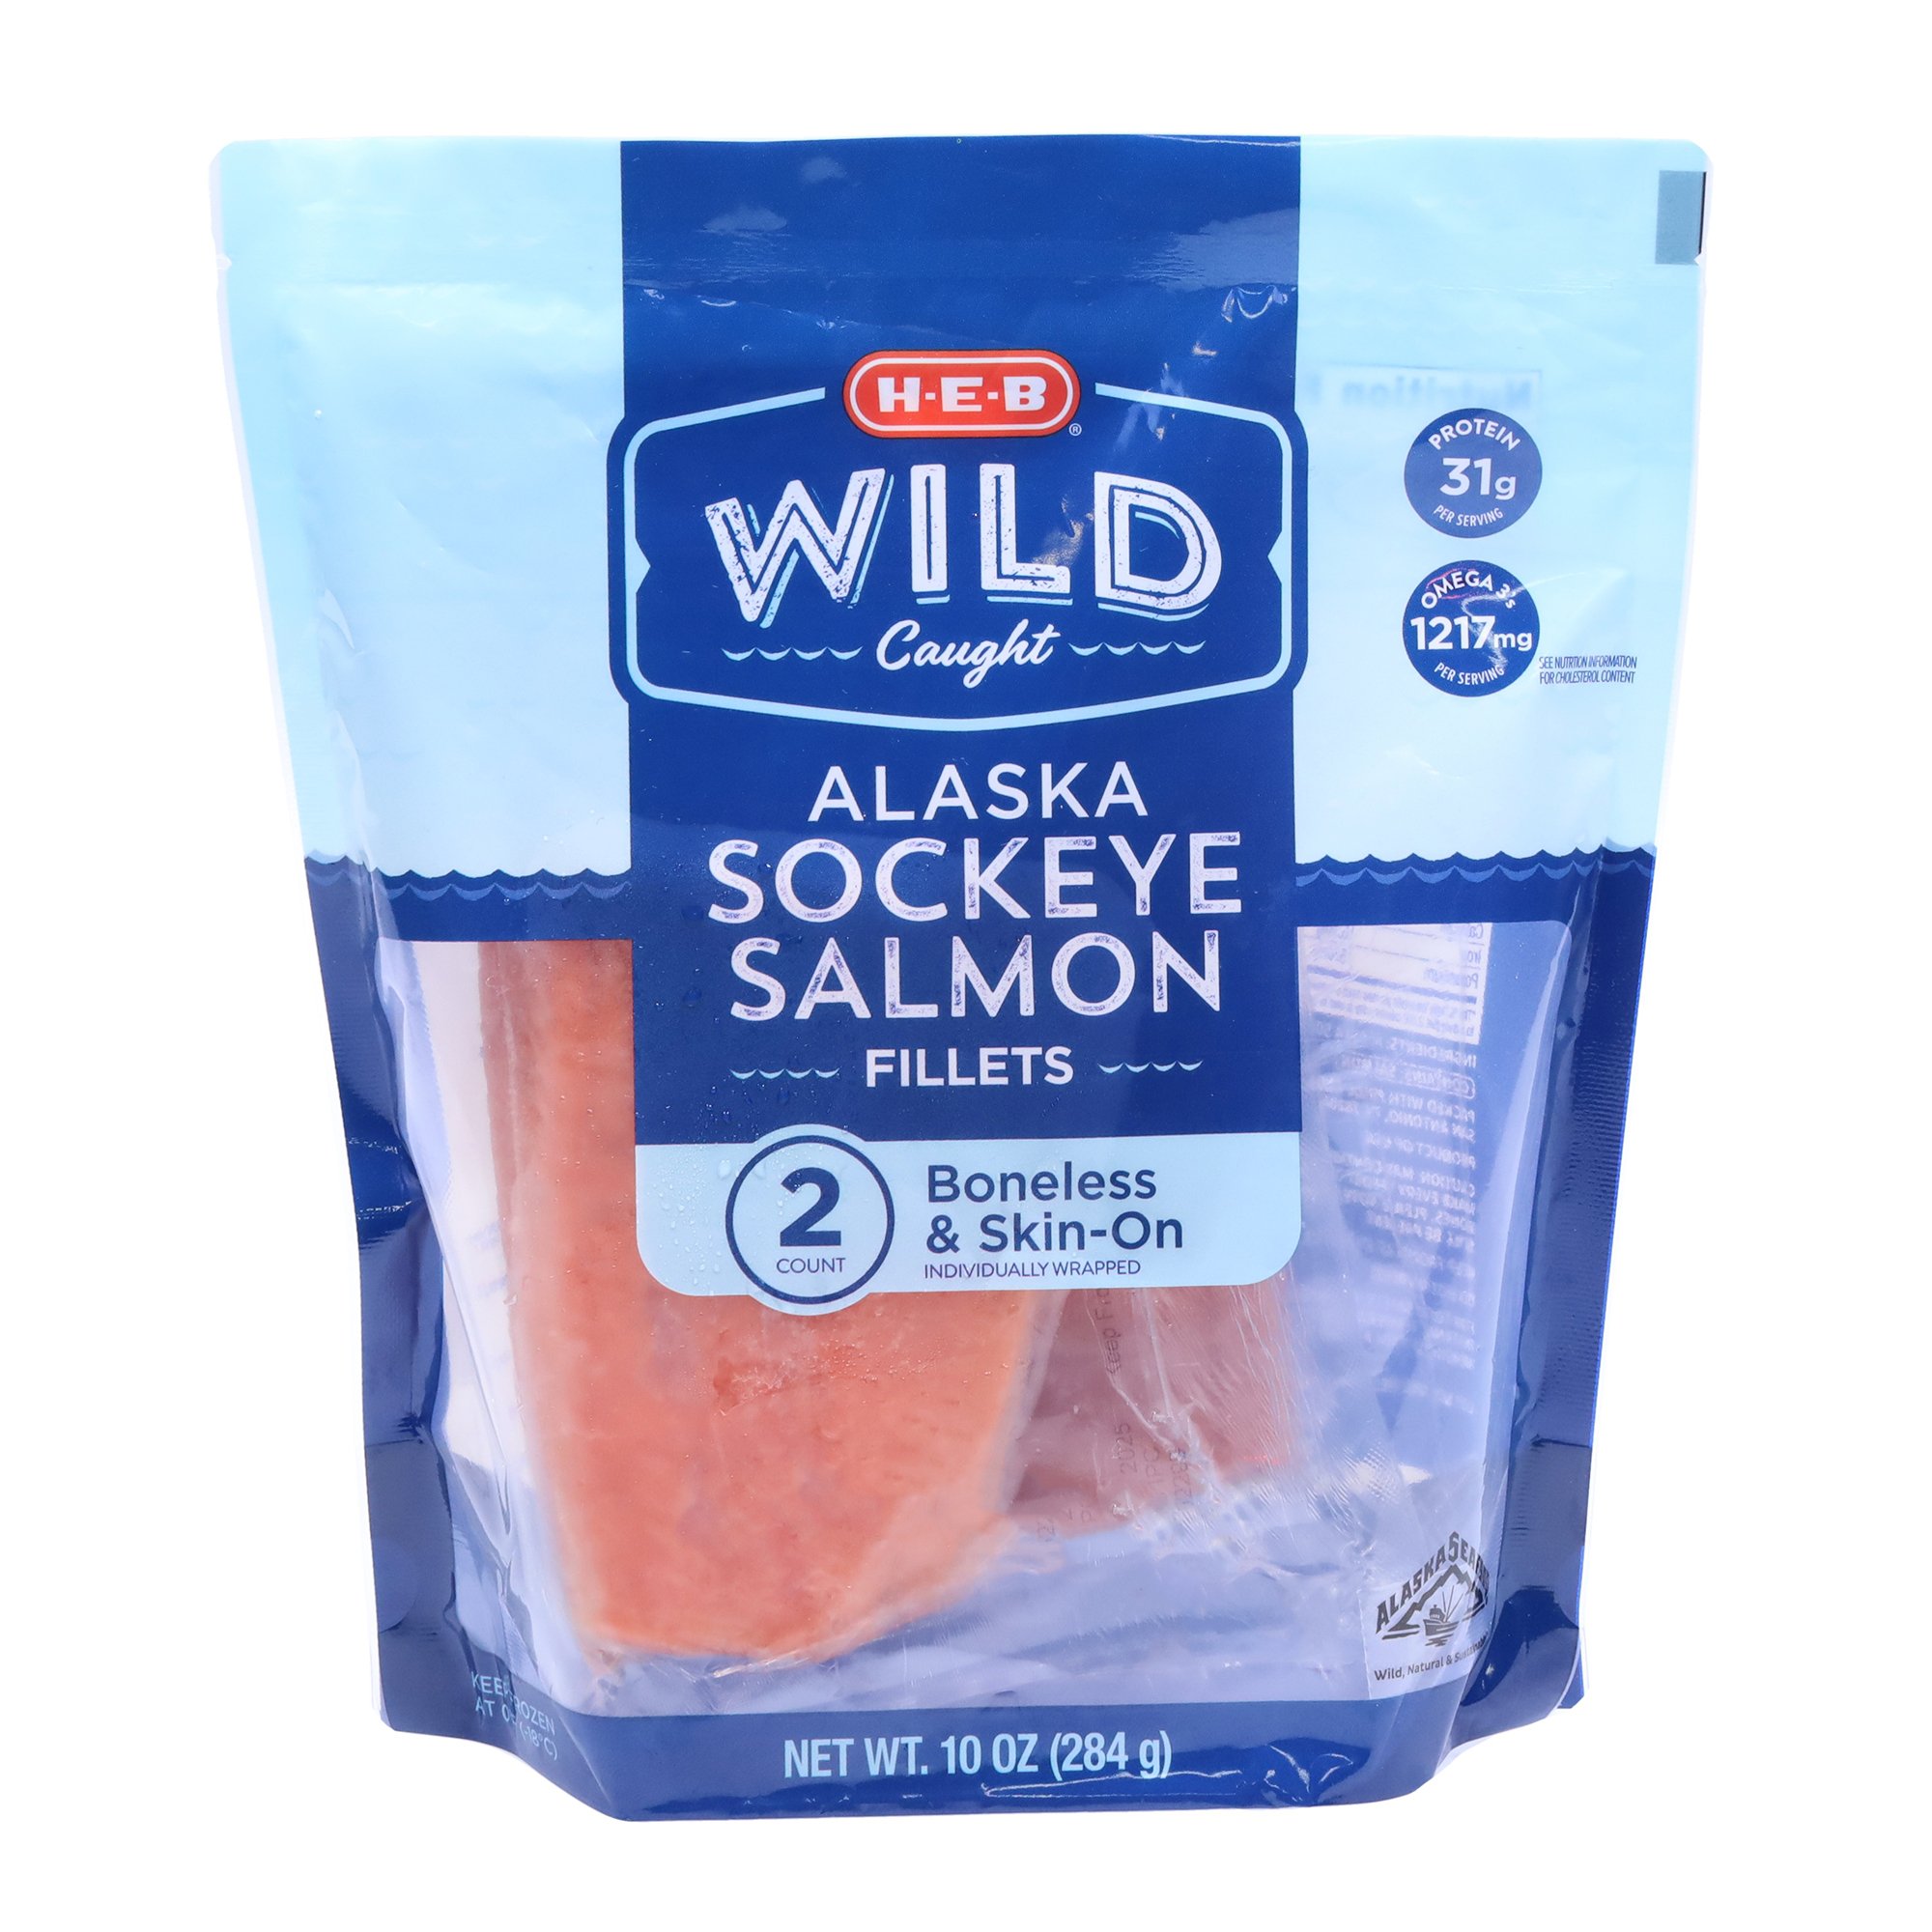 Wild Caught Alaskan Sockeye Salmon Fillets - Buy Wild Salmon Online